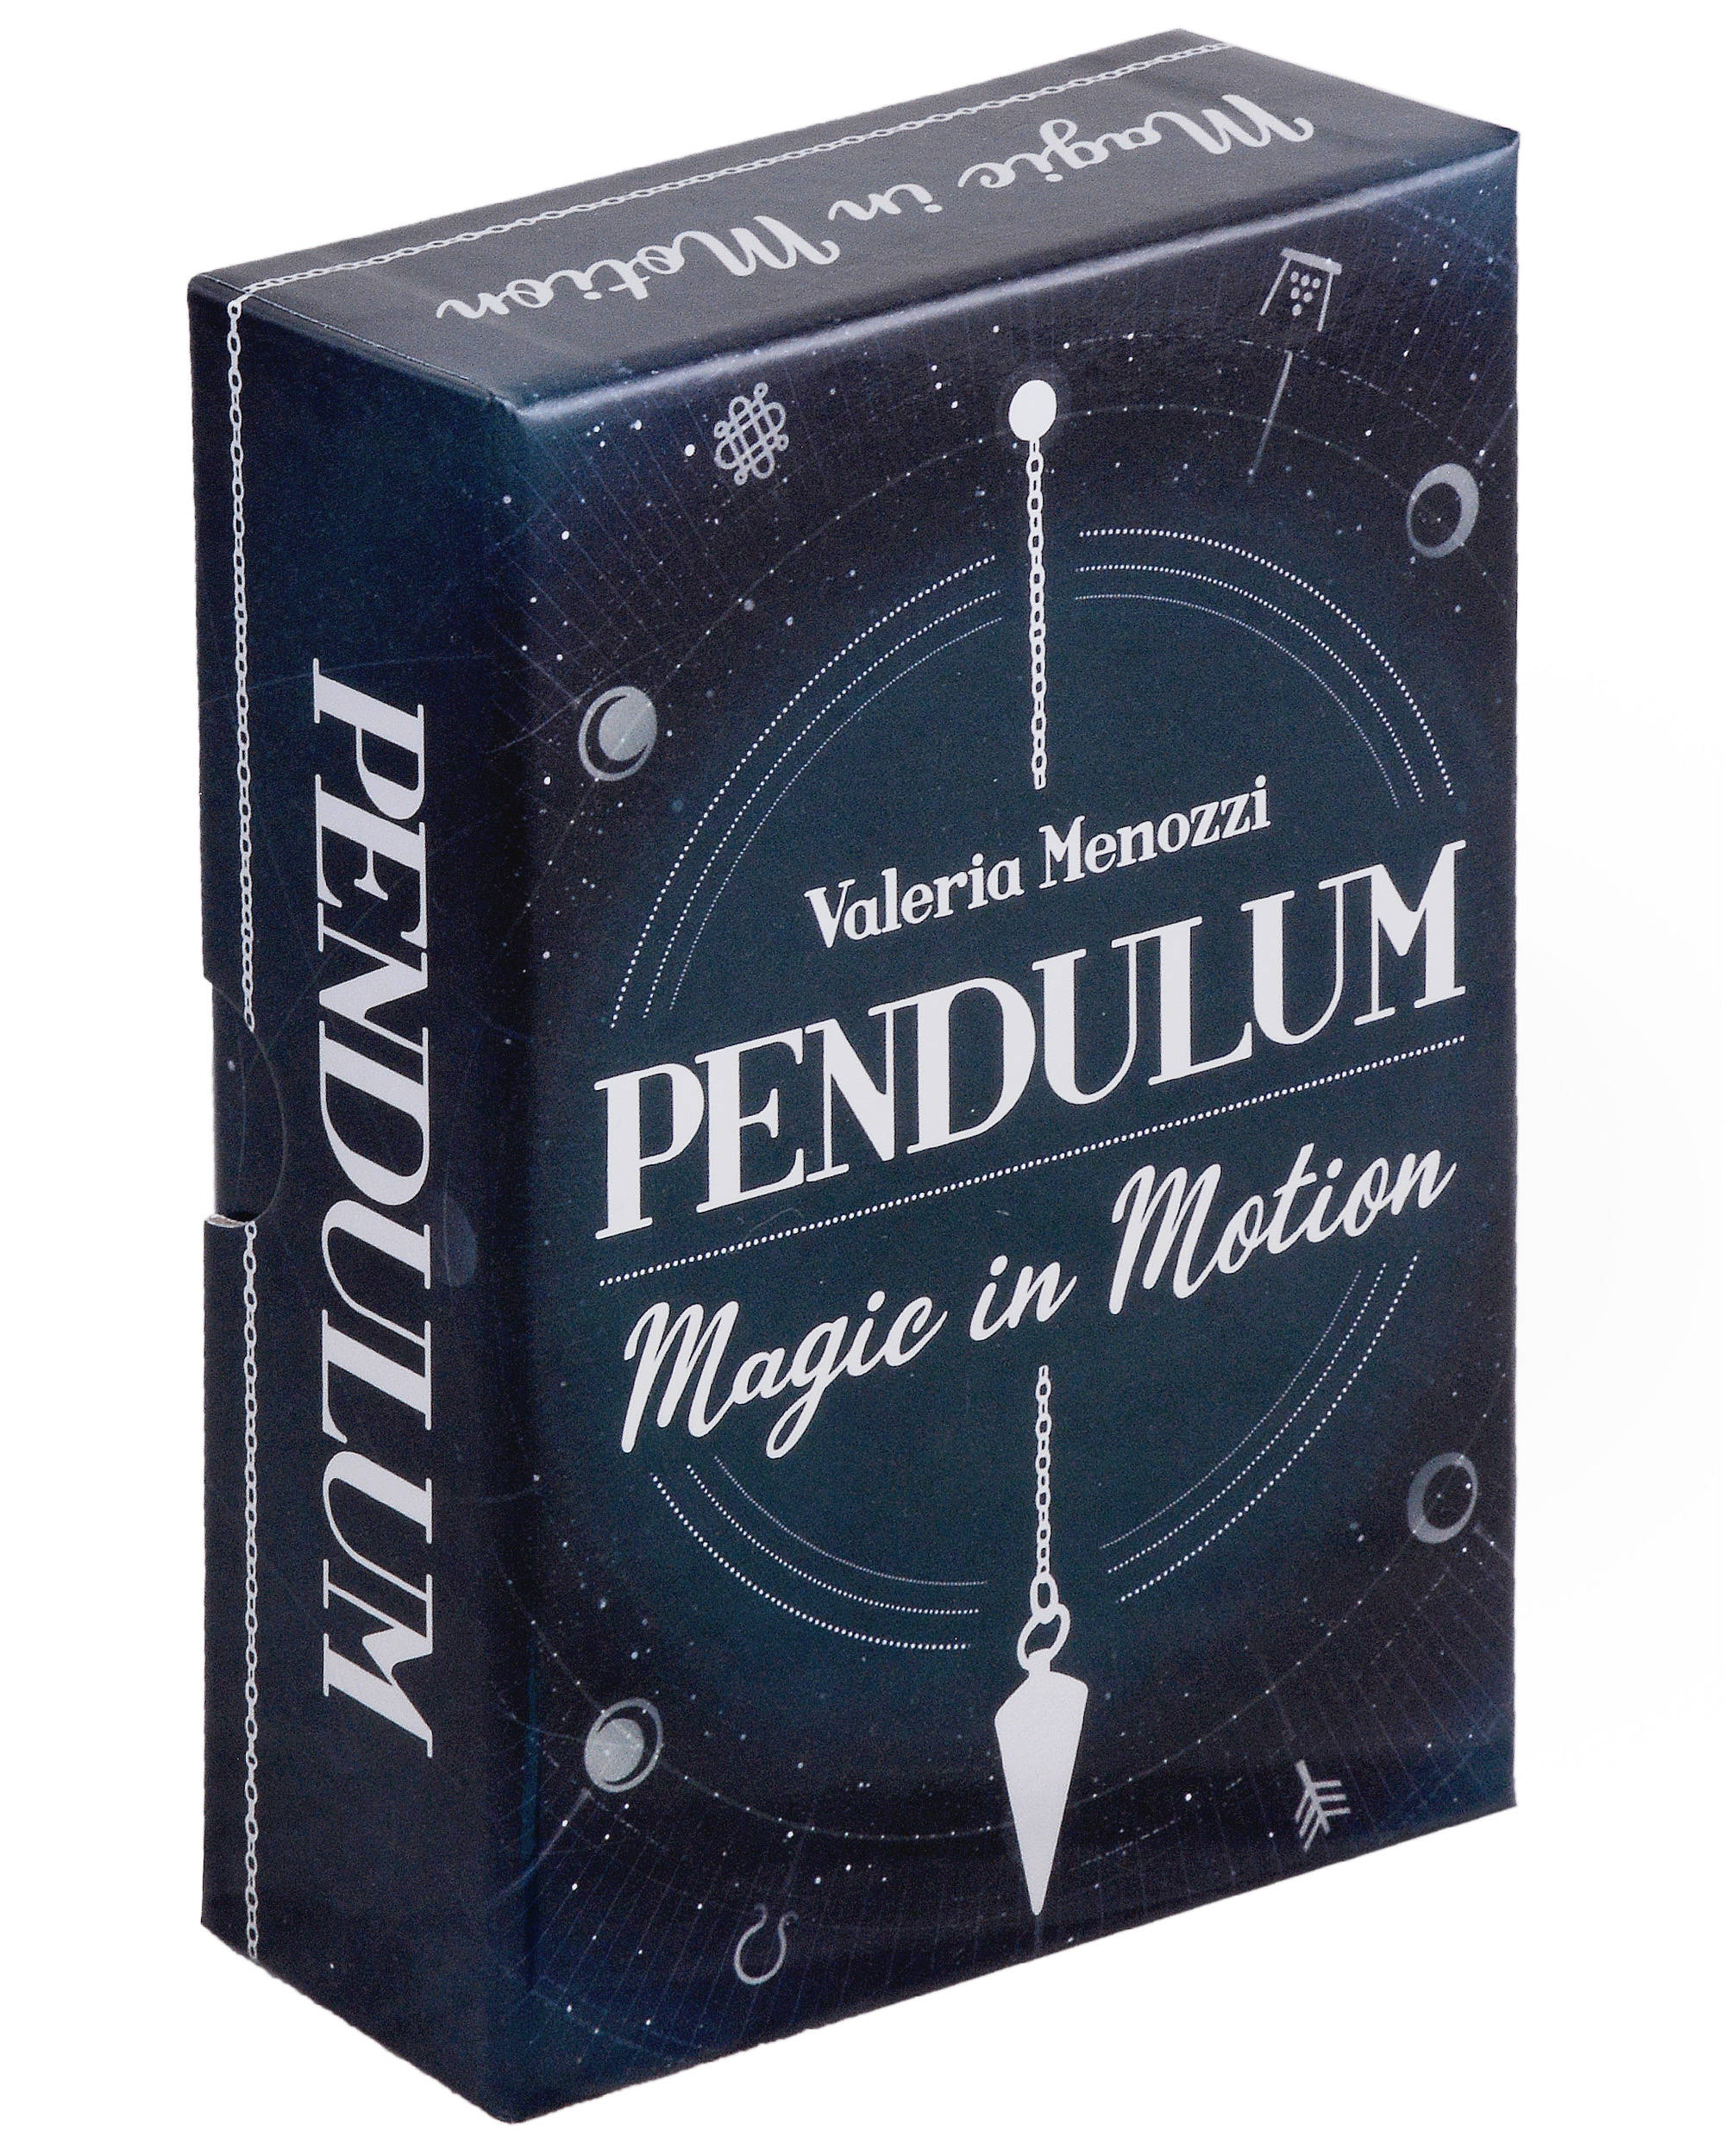 pendulum magic in motion оракул маятник магия в движении маятник двусторонняя приборная панель книга Pendulum - Magic in Motion / Оракул Маятник - Магия в движении (маятник + двусторонняя приборная панель + книга)